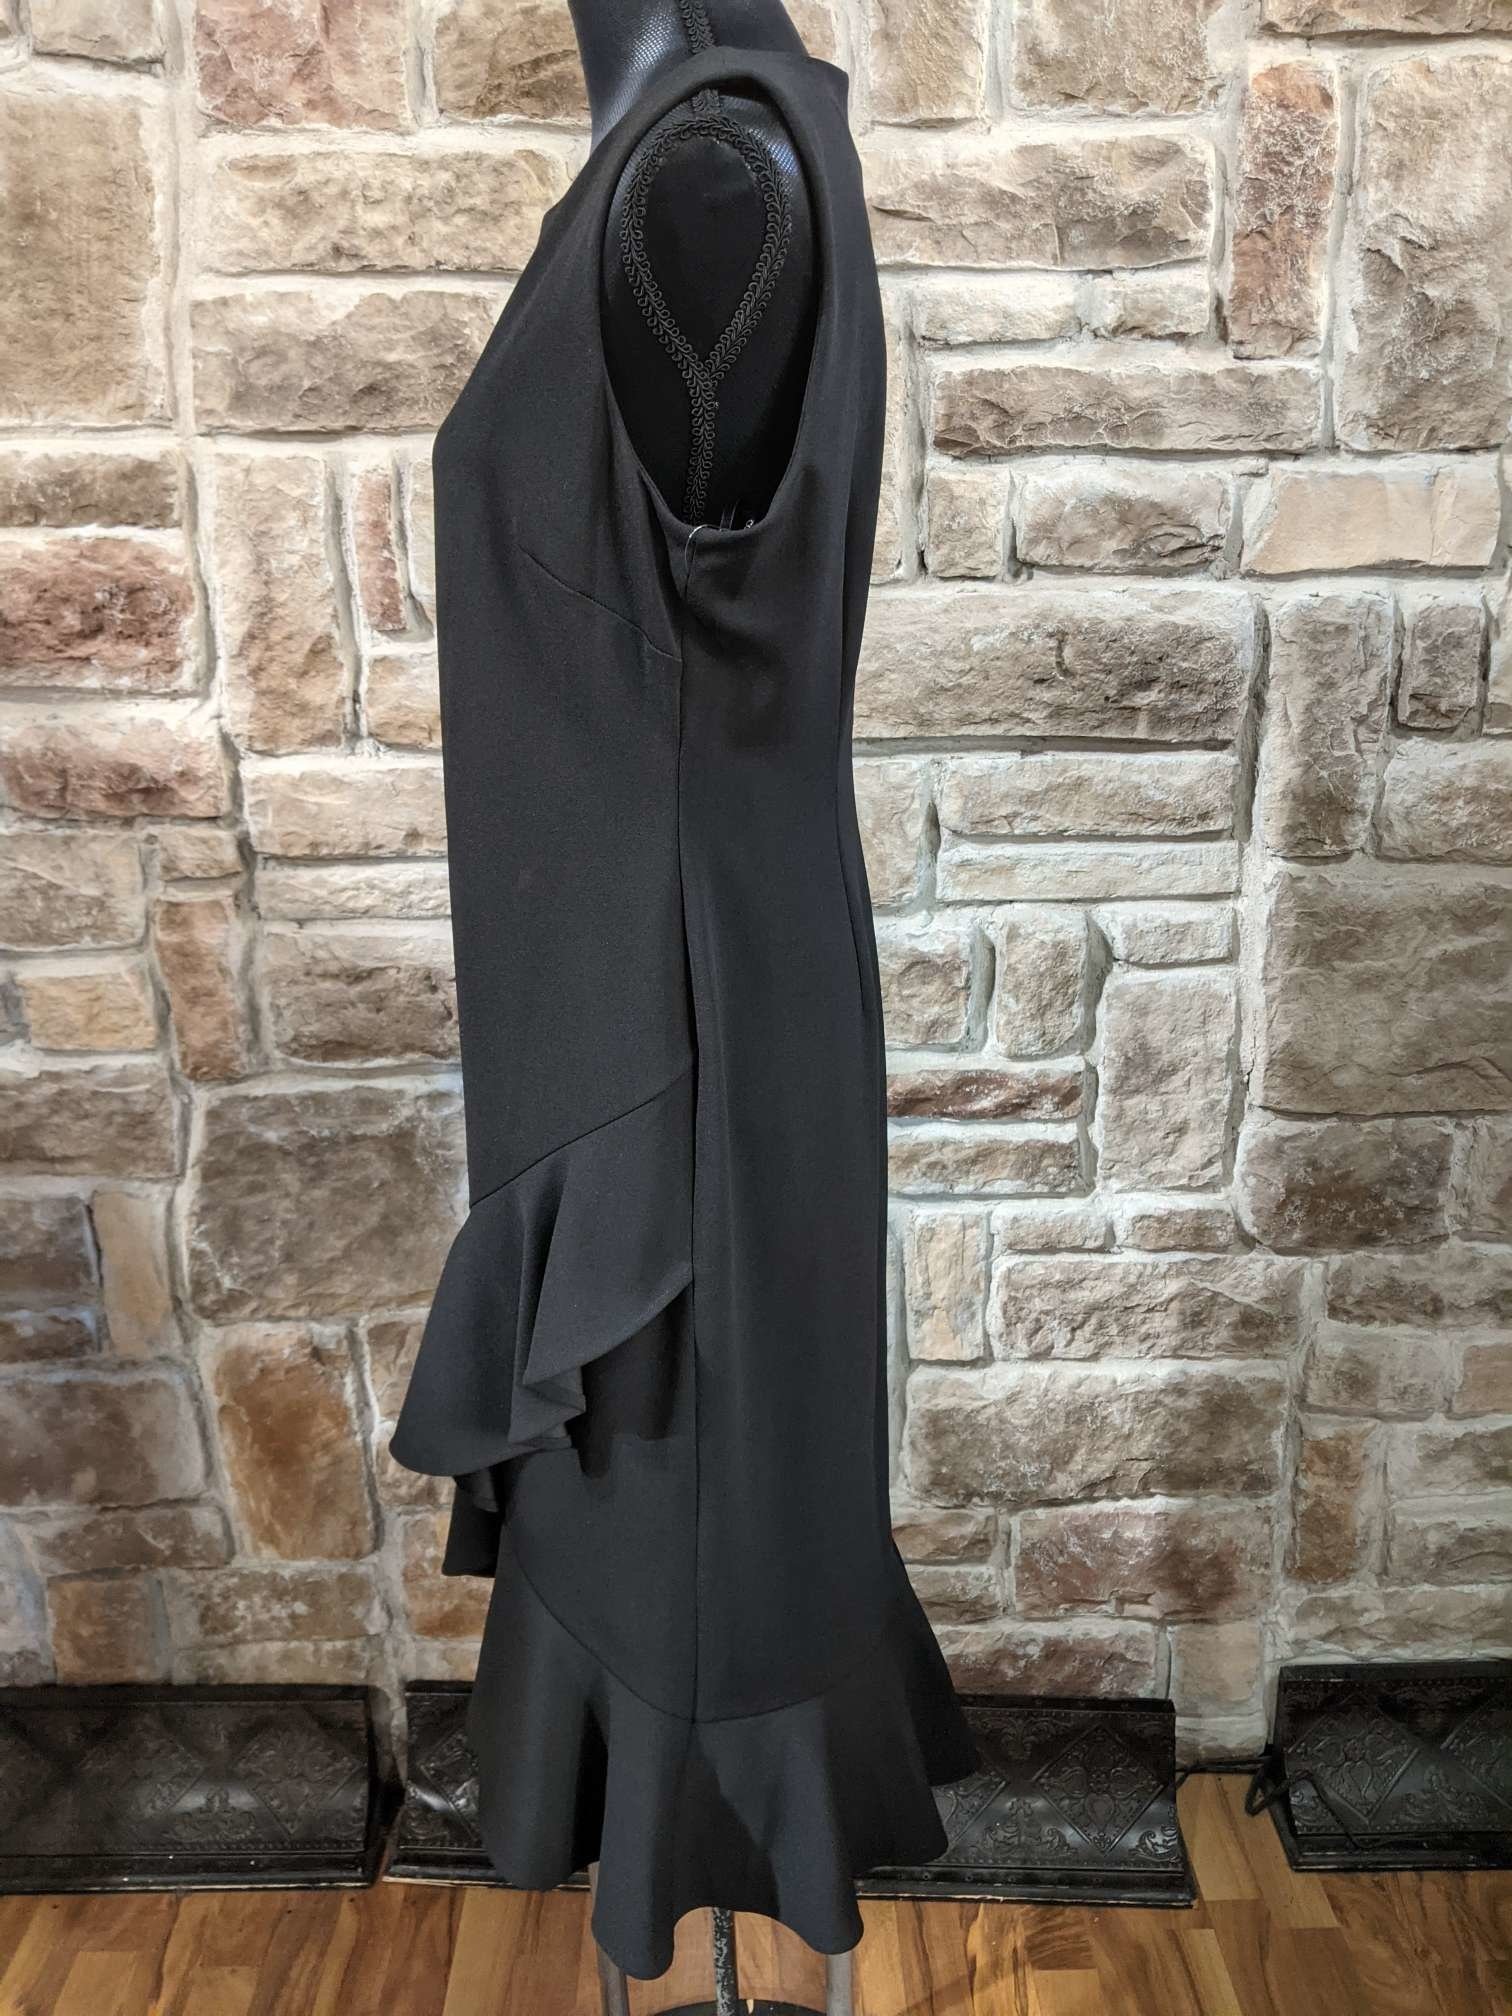 Calvin Klein Black Sheath Ruffle Dress, Size 12 - Elements Unleashed